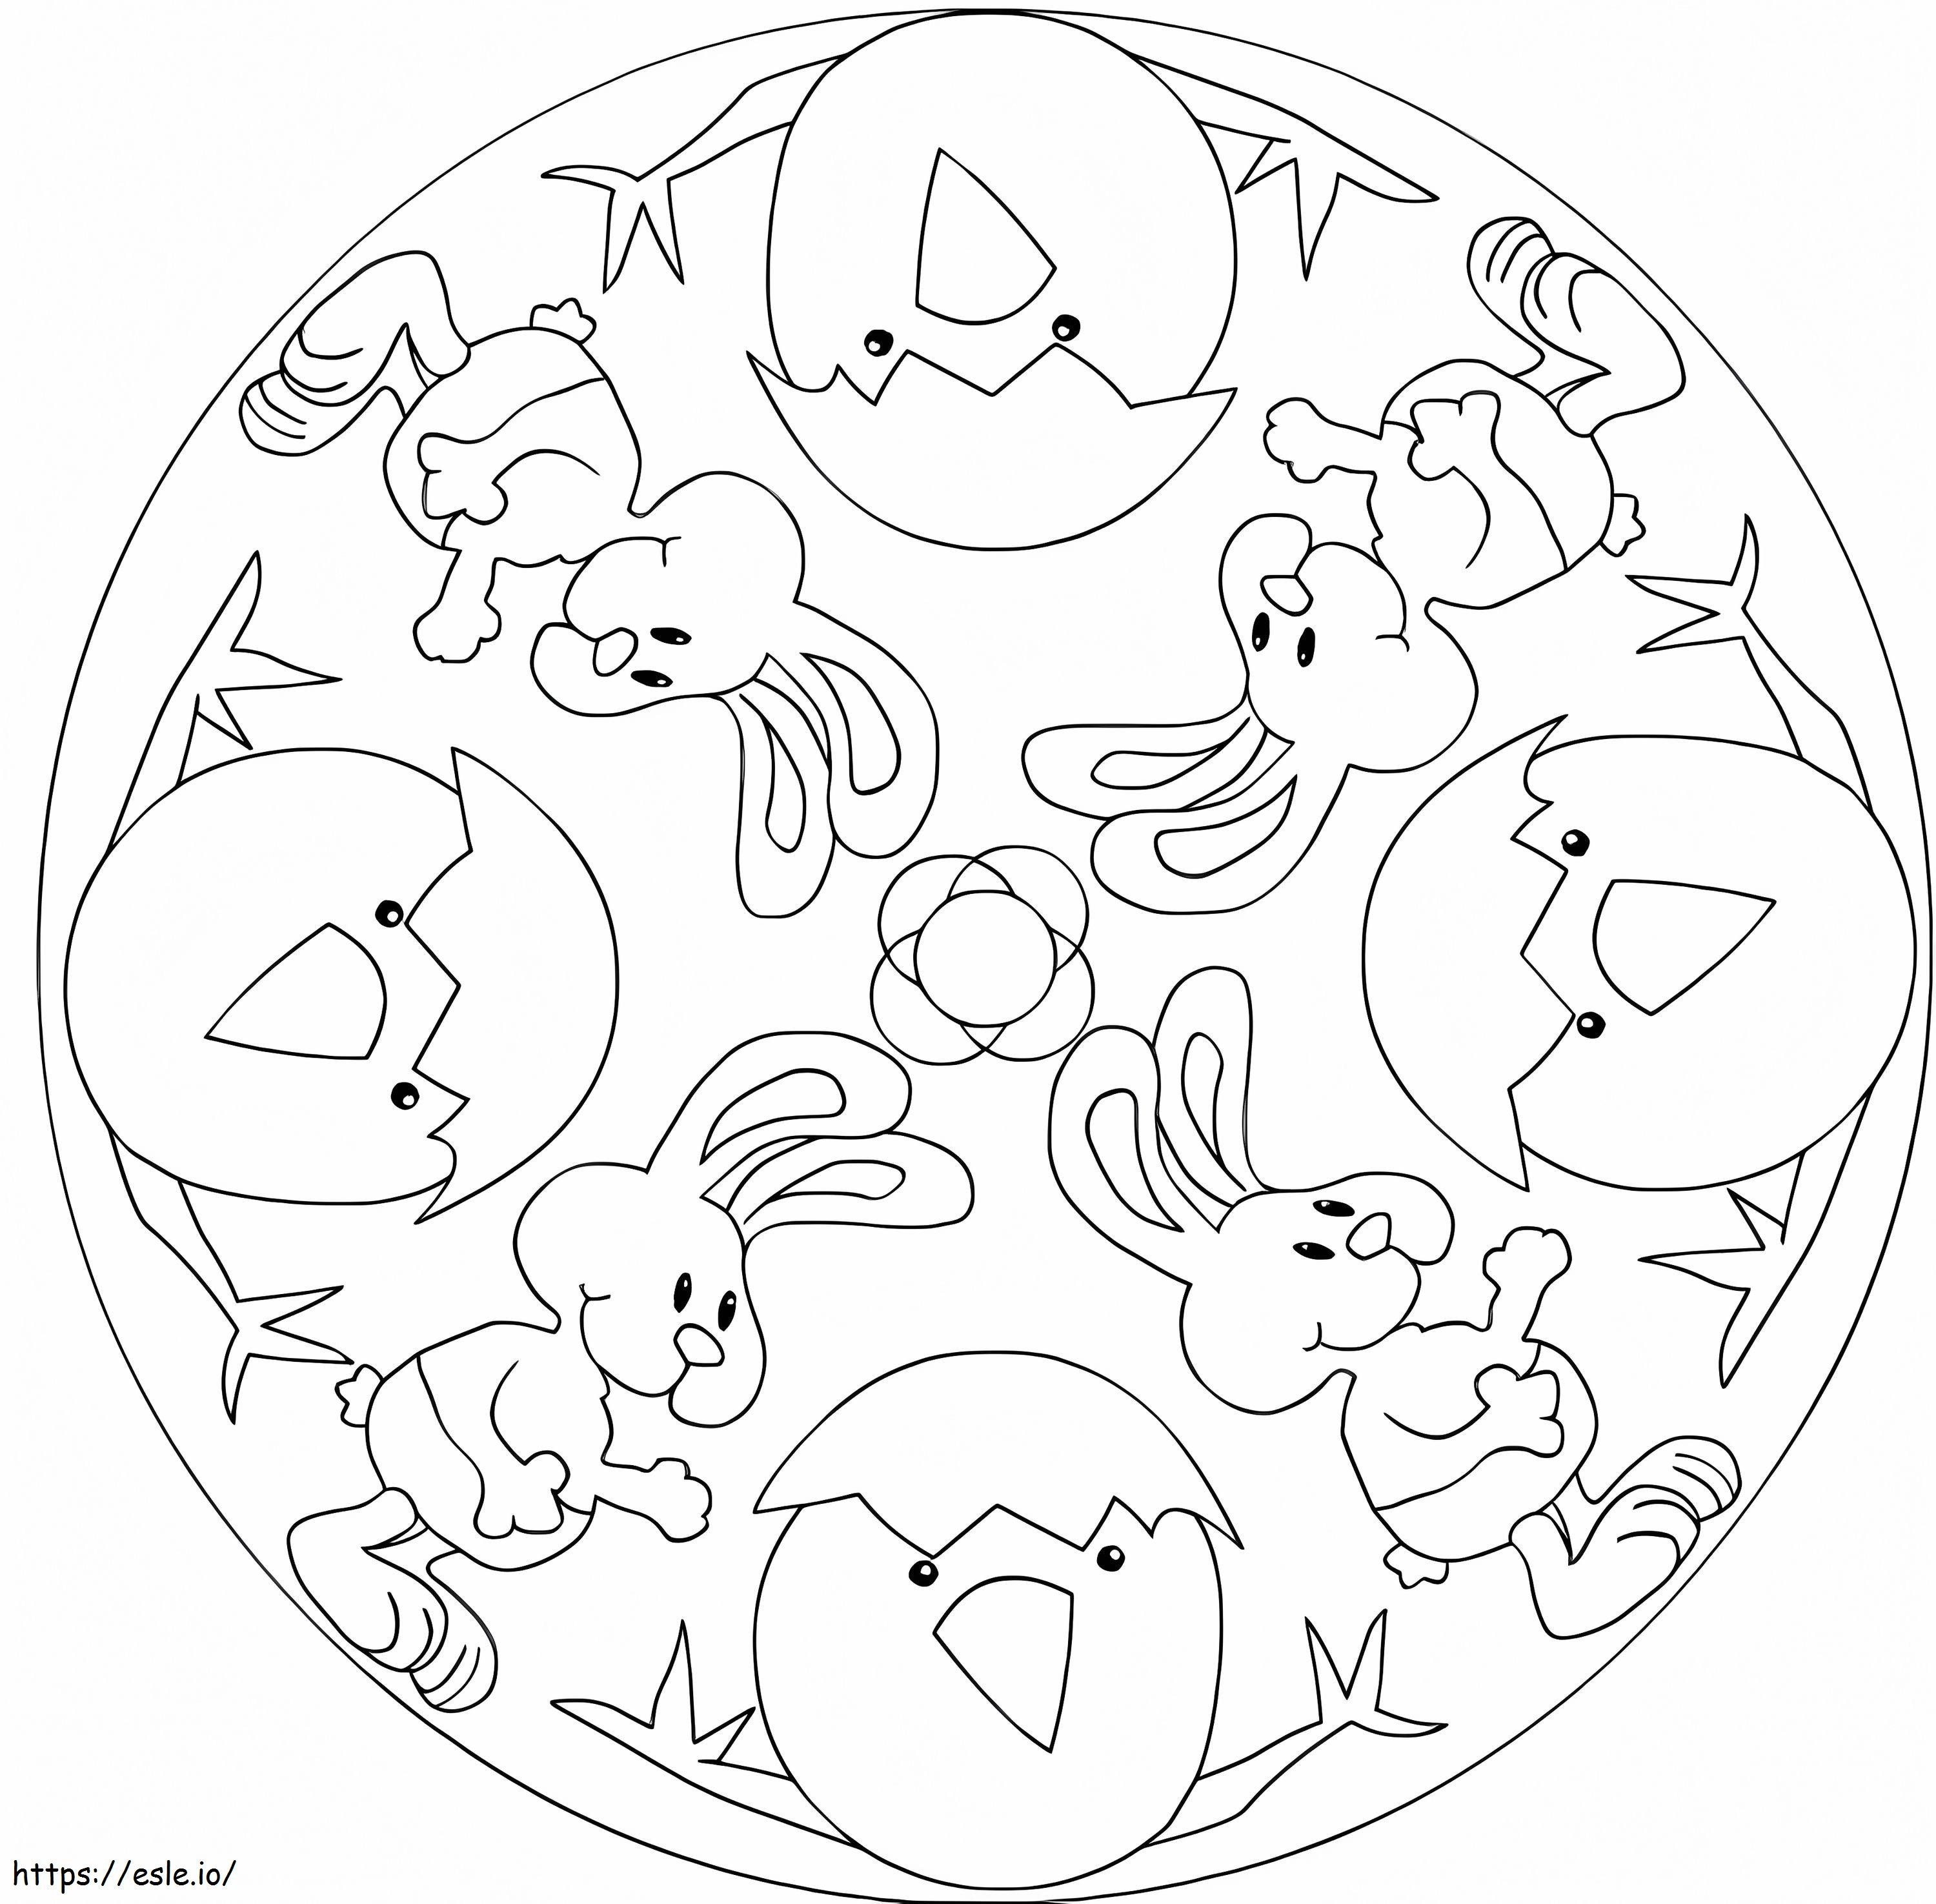 Mandala Easter 1 coloring page